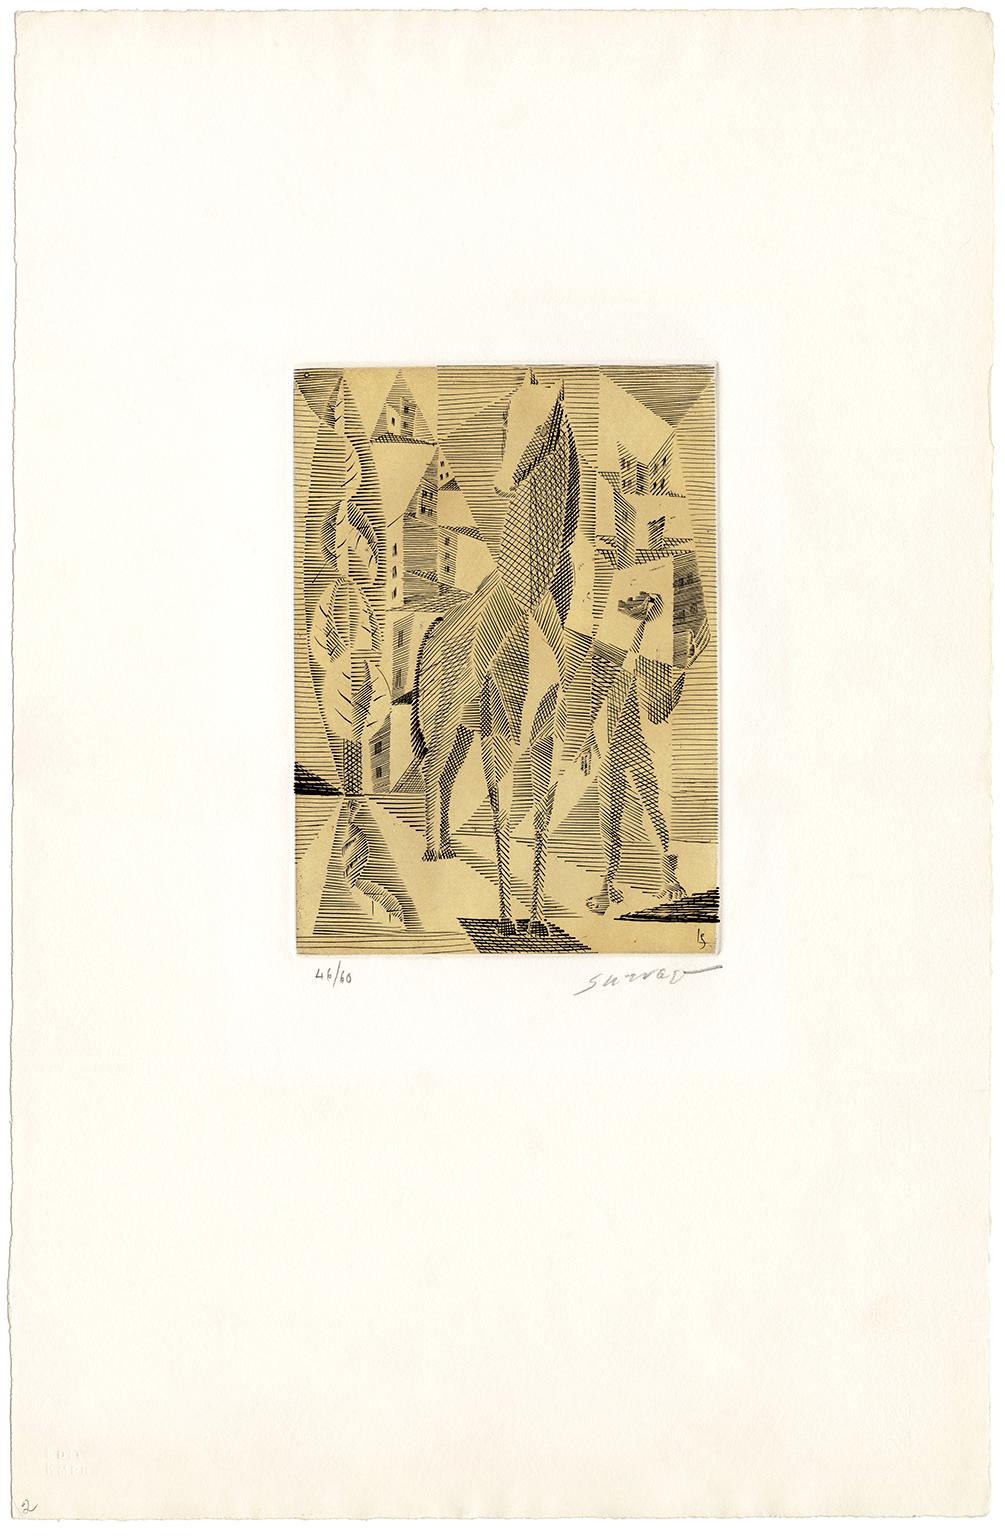 Le Cheval (The Horse) — Mid-Century Cubism - Print by Léopold Survage